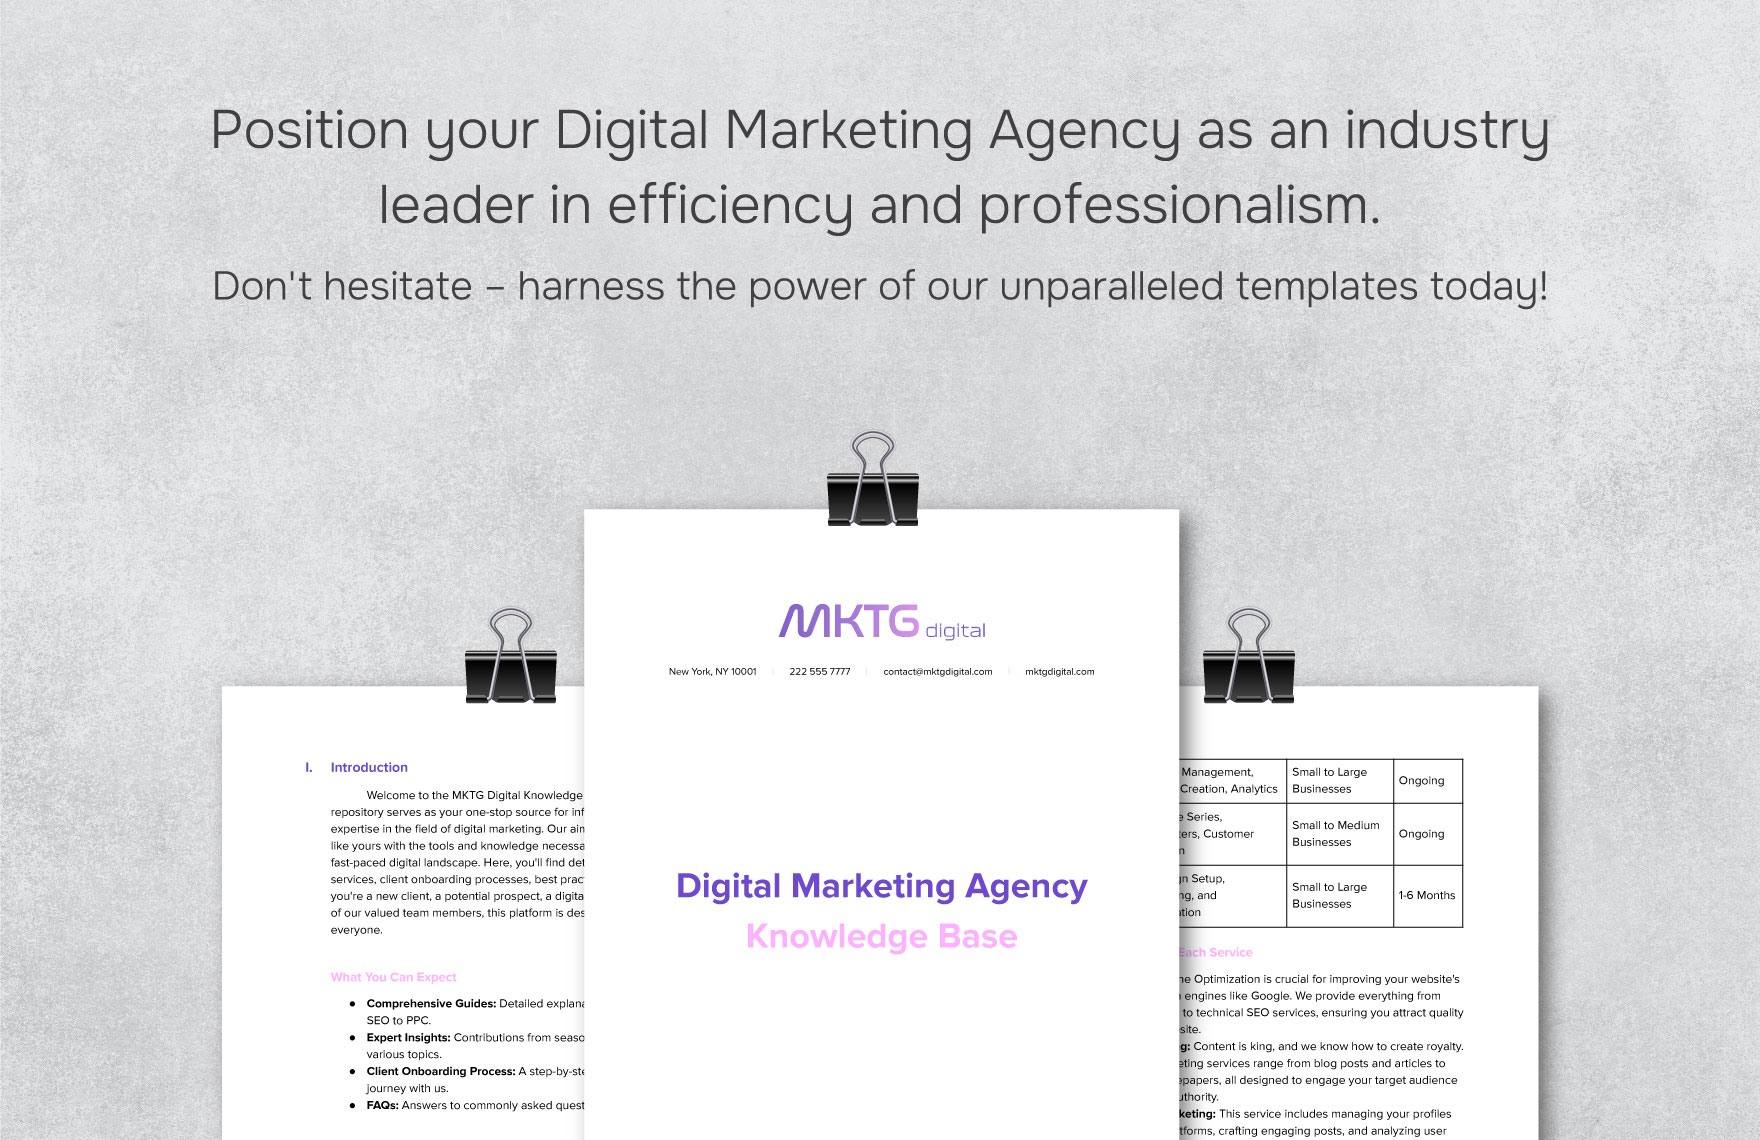 Digital Marketing Agency Knowledge Base Template